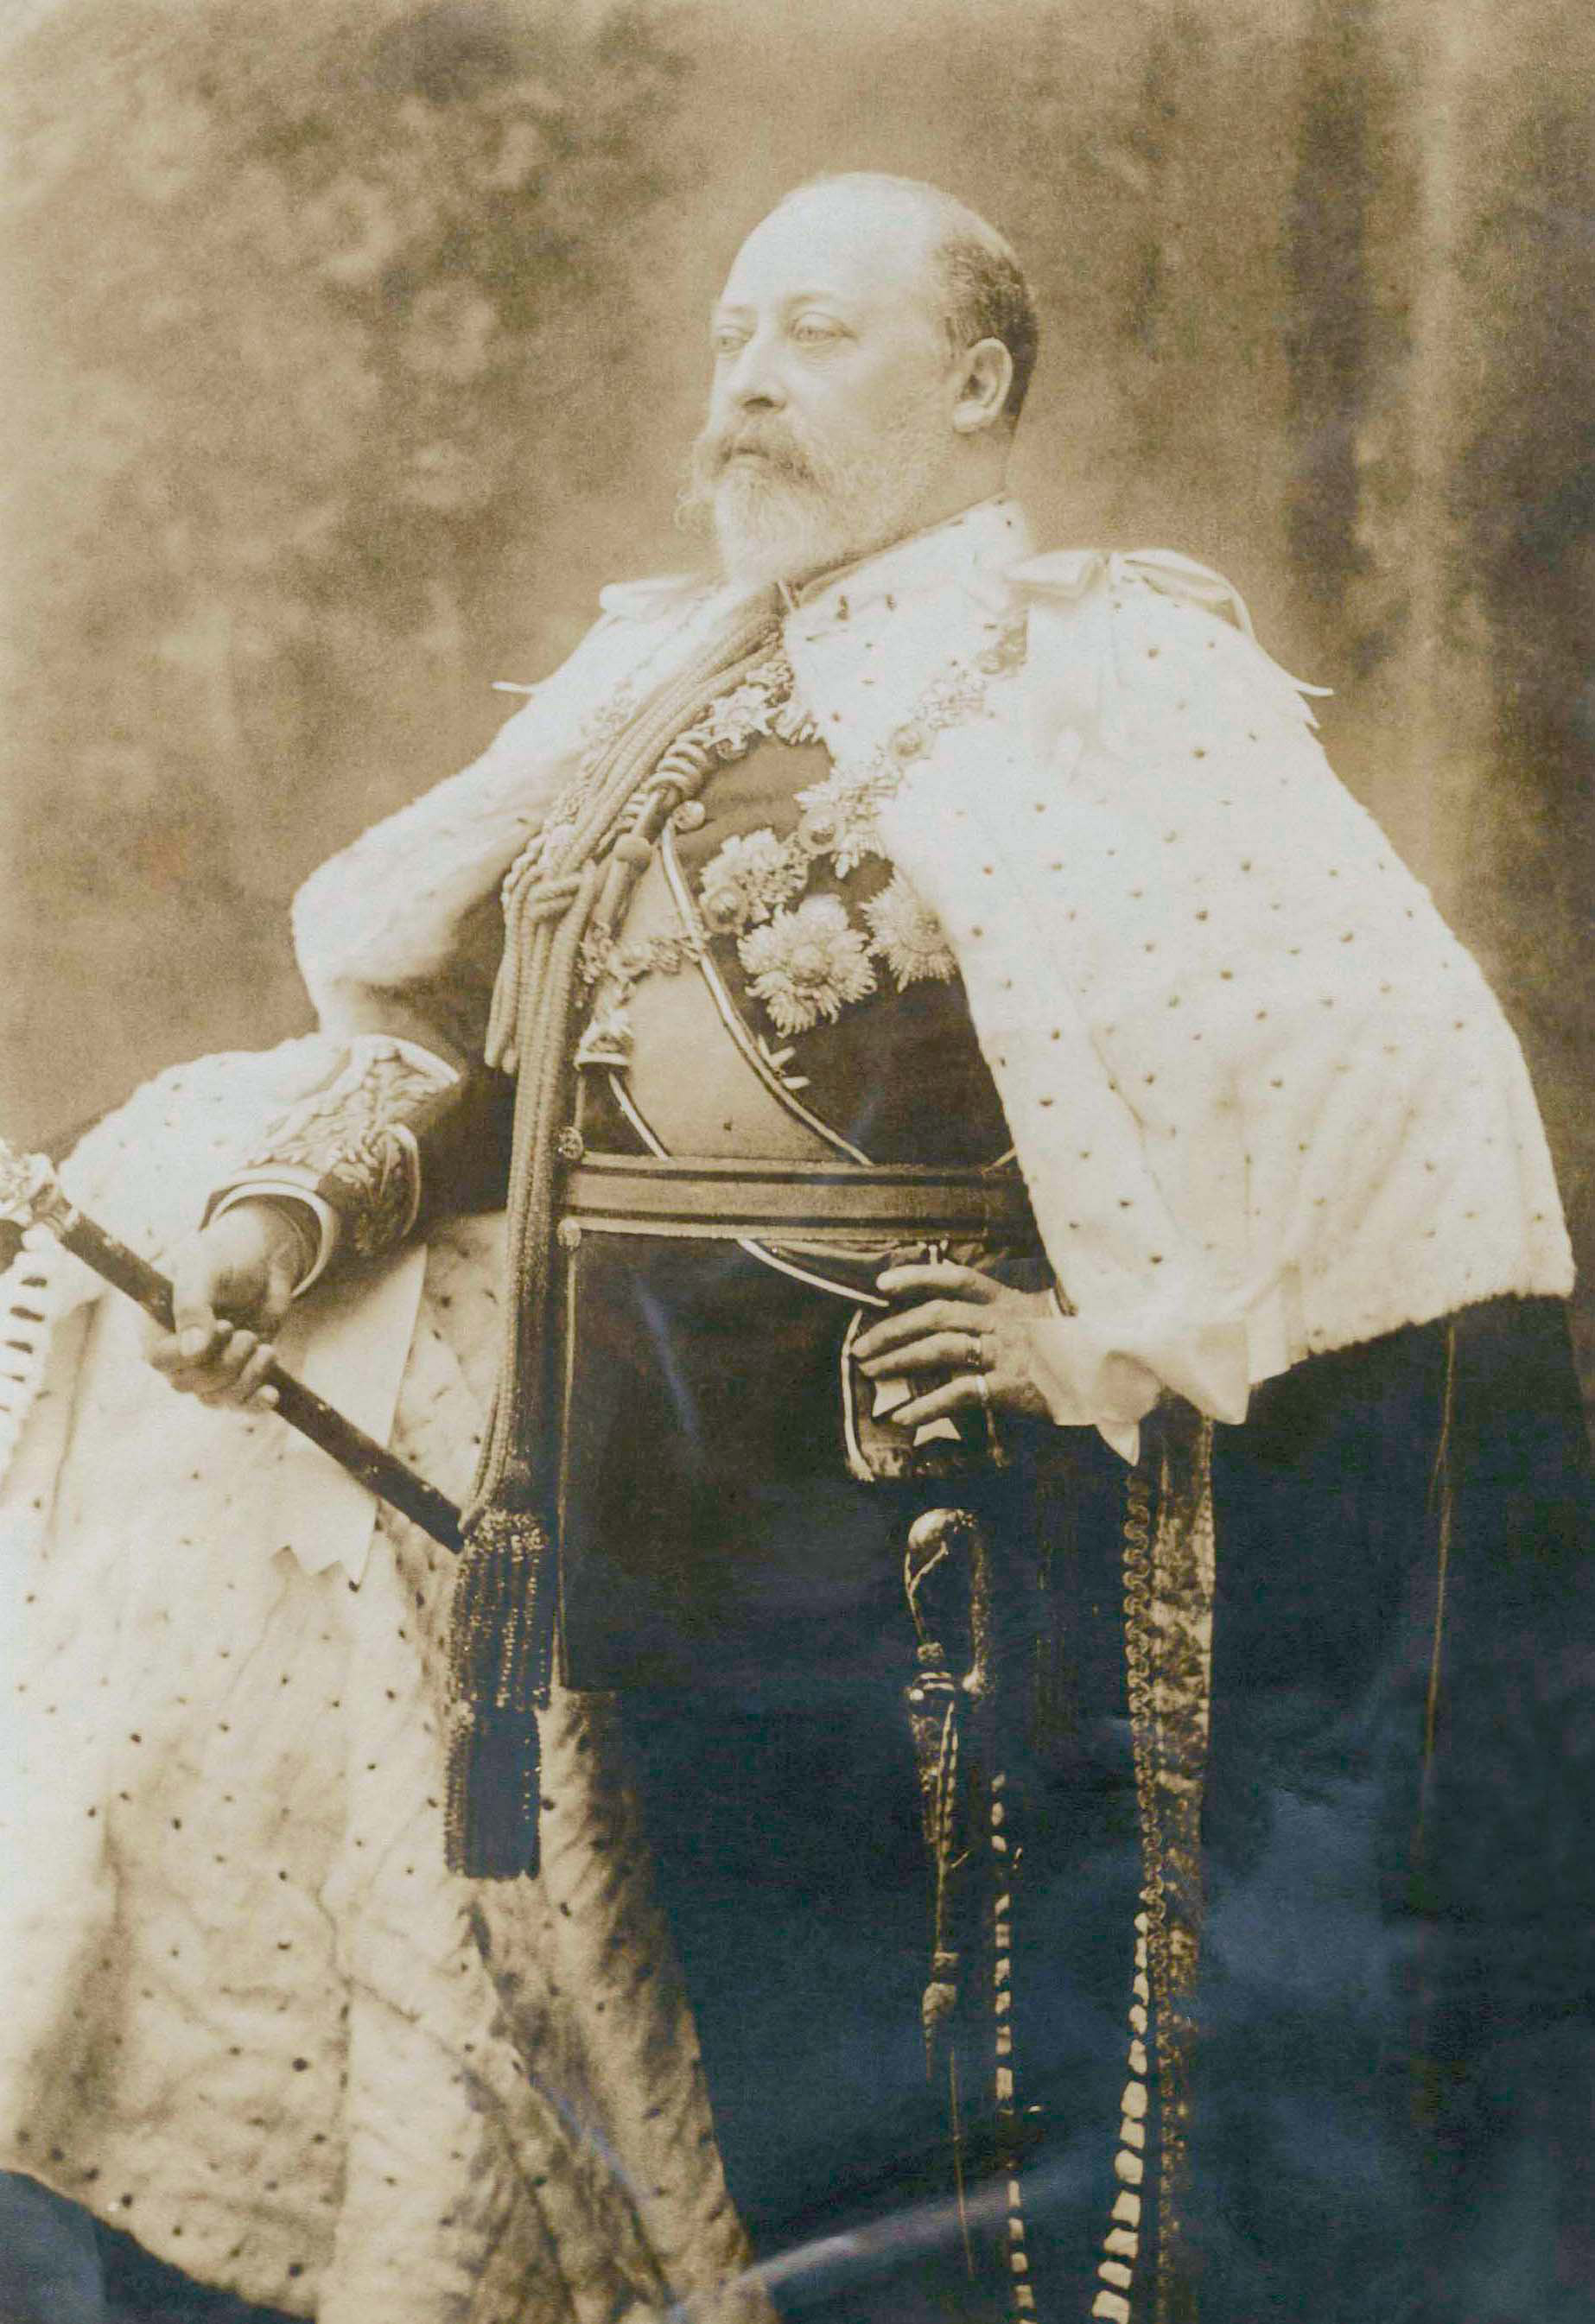 King Edward VII circa 1900